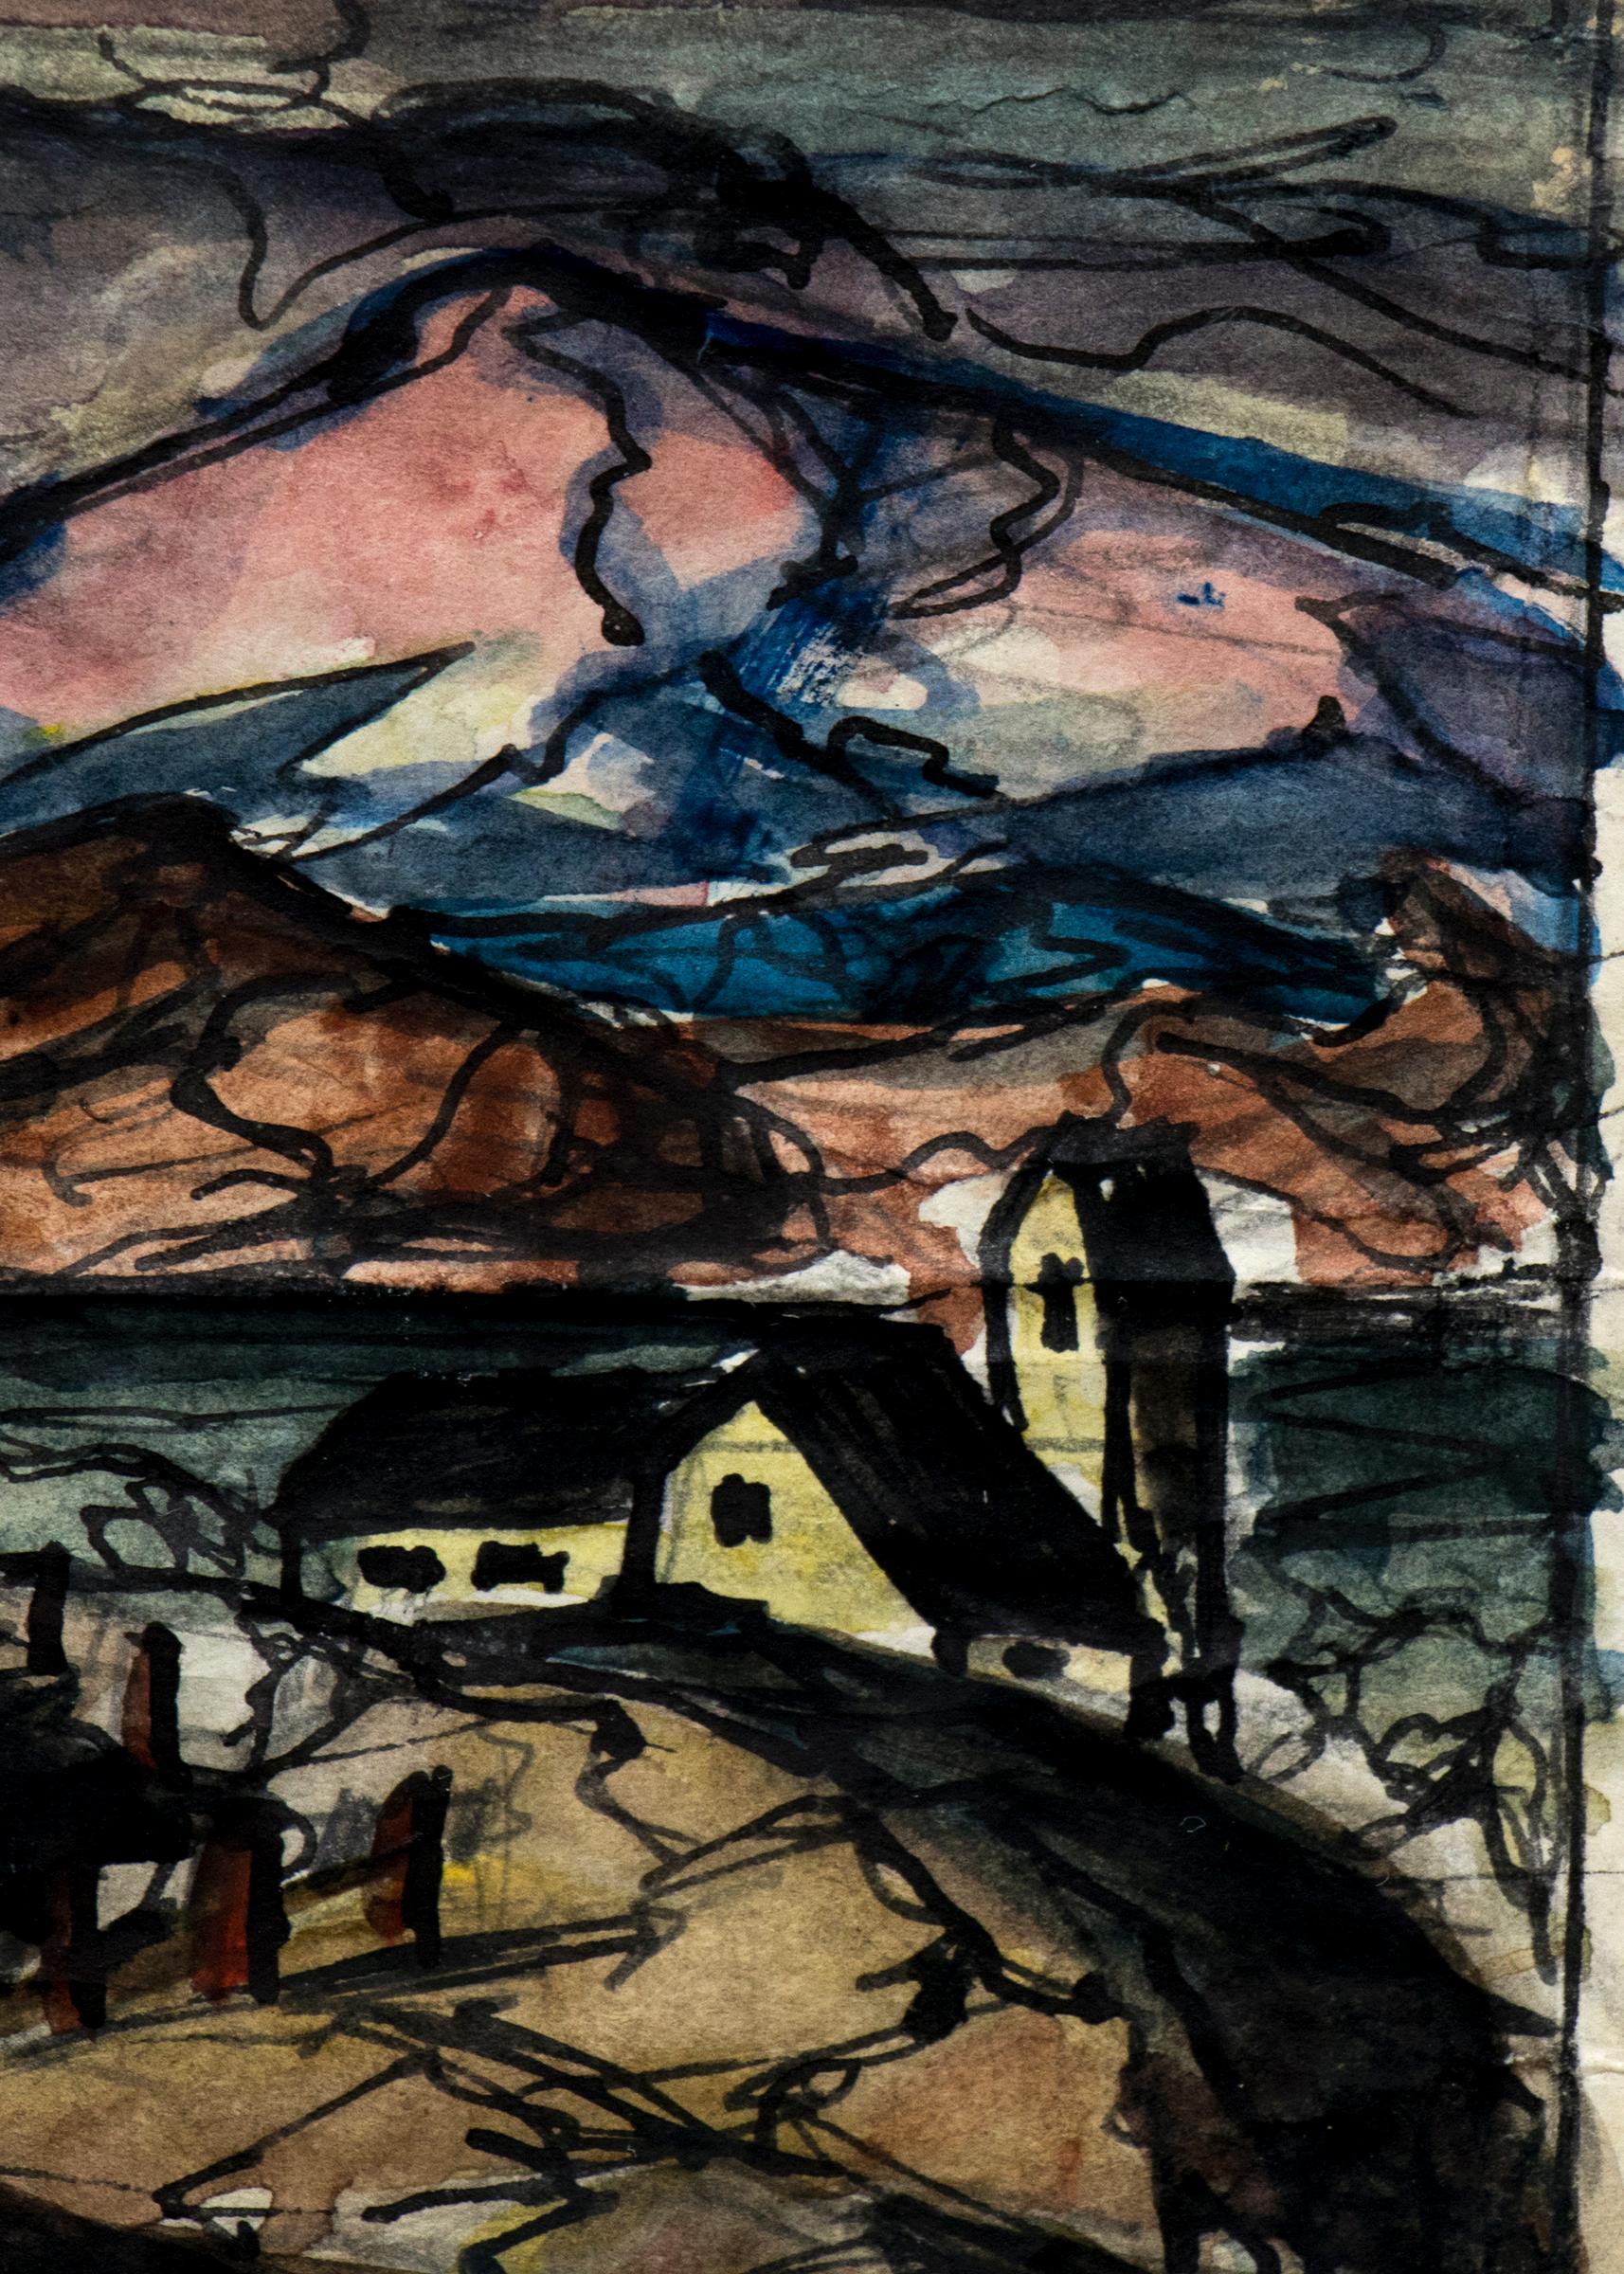 Cripple Creek Victor Mine, Colorado-Berglandschaft, Aquarellmalerei, 1940 im Angebot 1